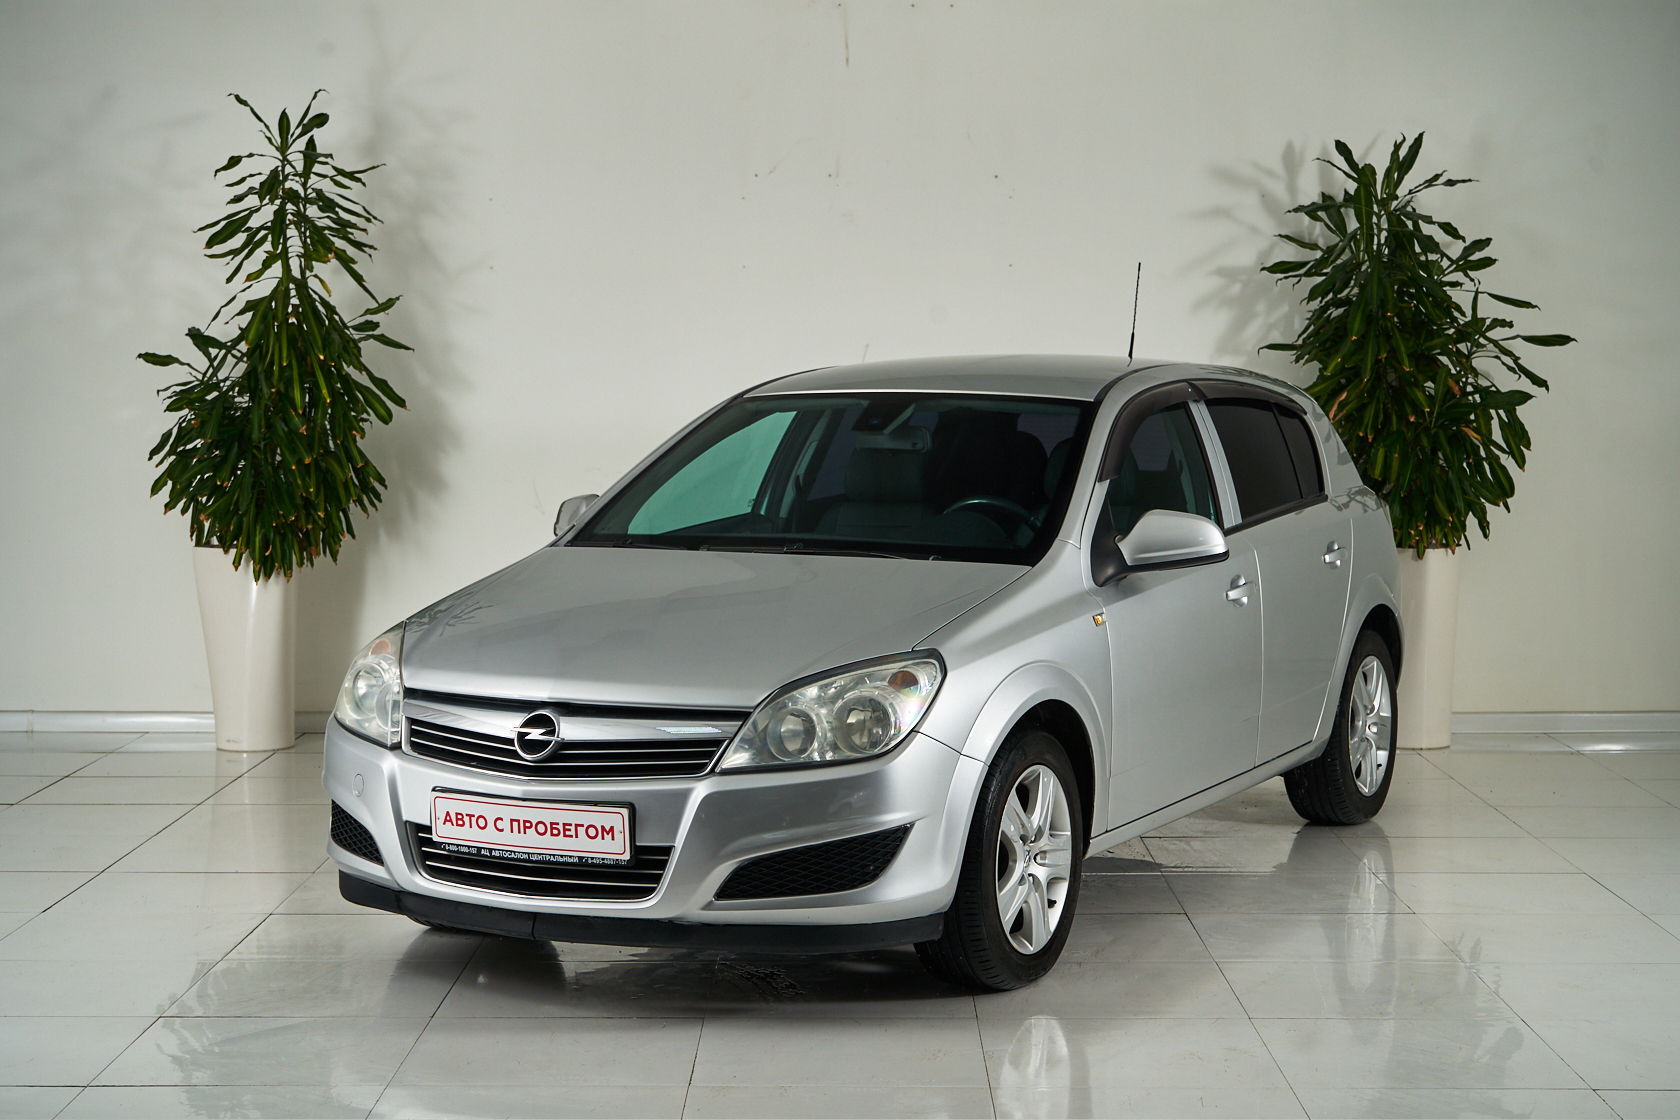 2010 Opel Astra III №6072602, Серебряный, 367000 рублей - вид 1